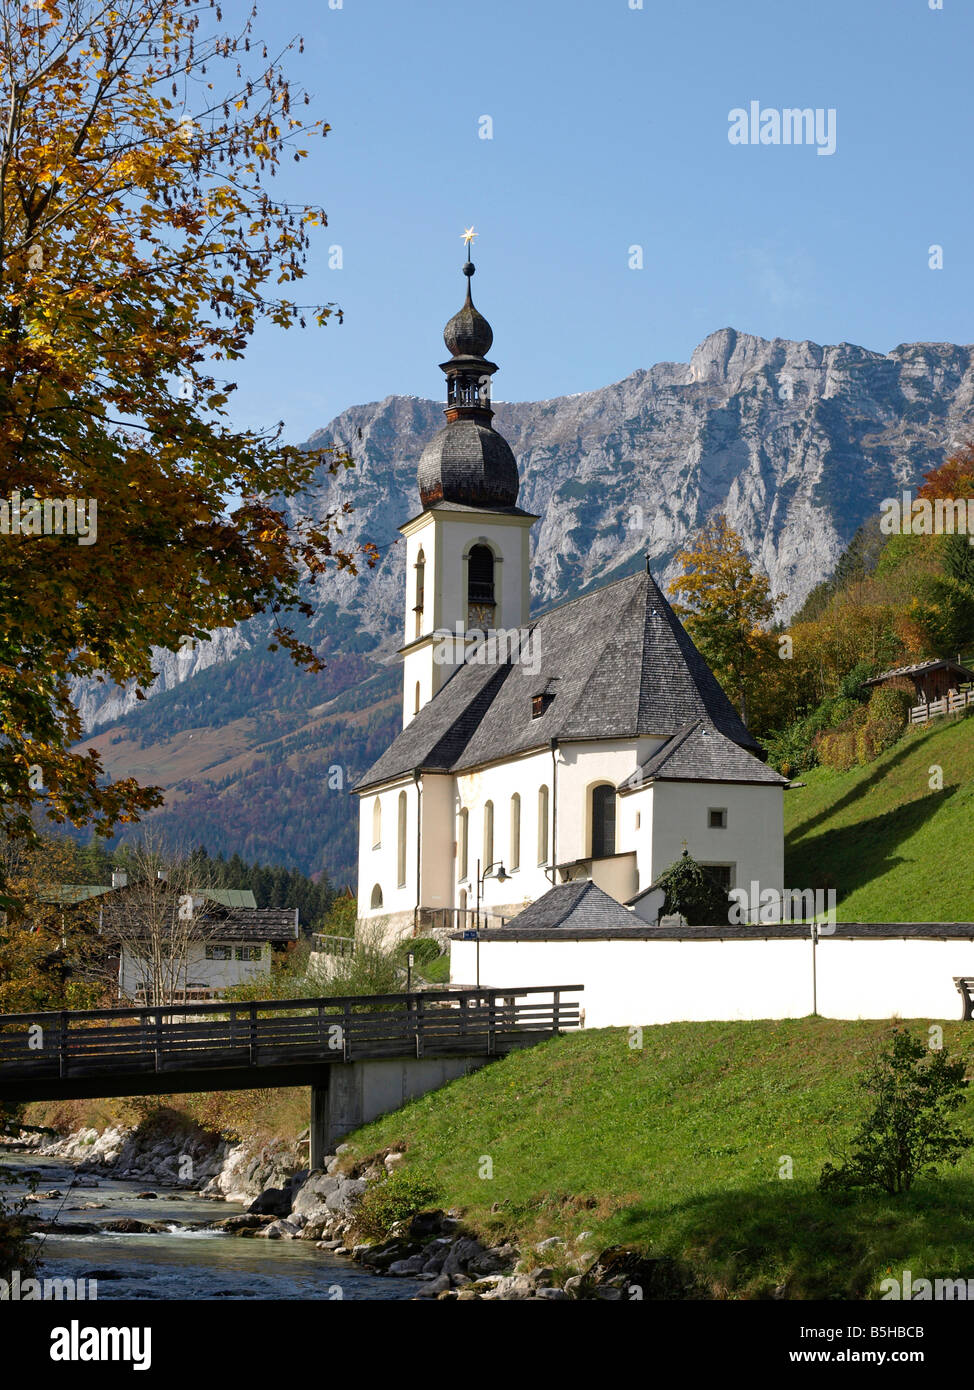 Ramsauer Kirche bei Berchtesgaden, Chiesa di Ramsau Alpi bavaresi Foto Stock